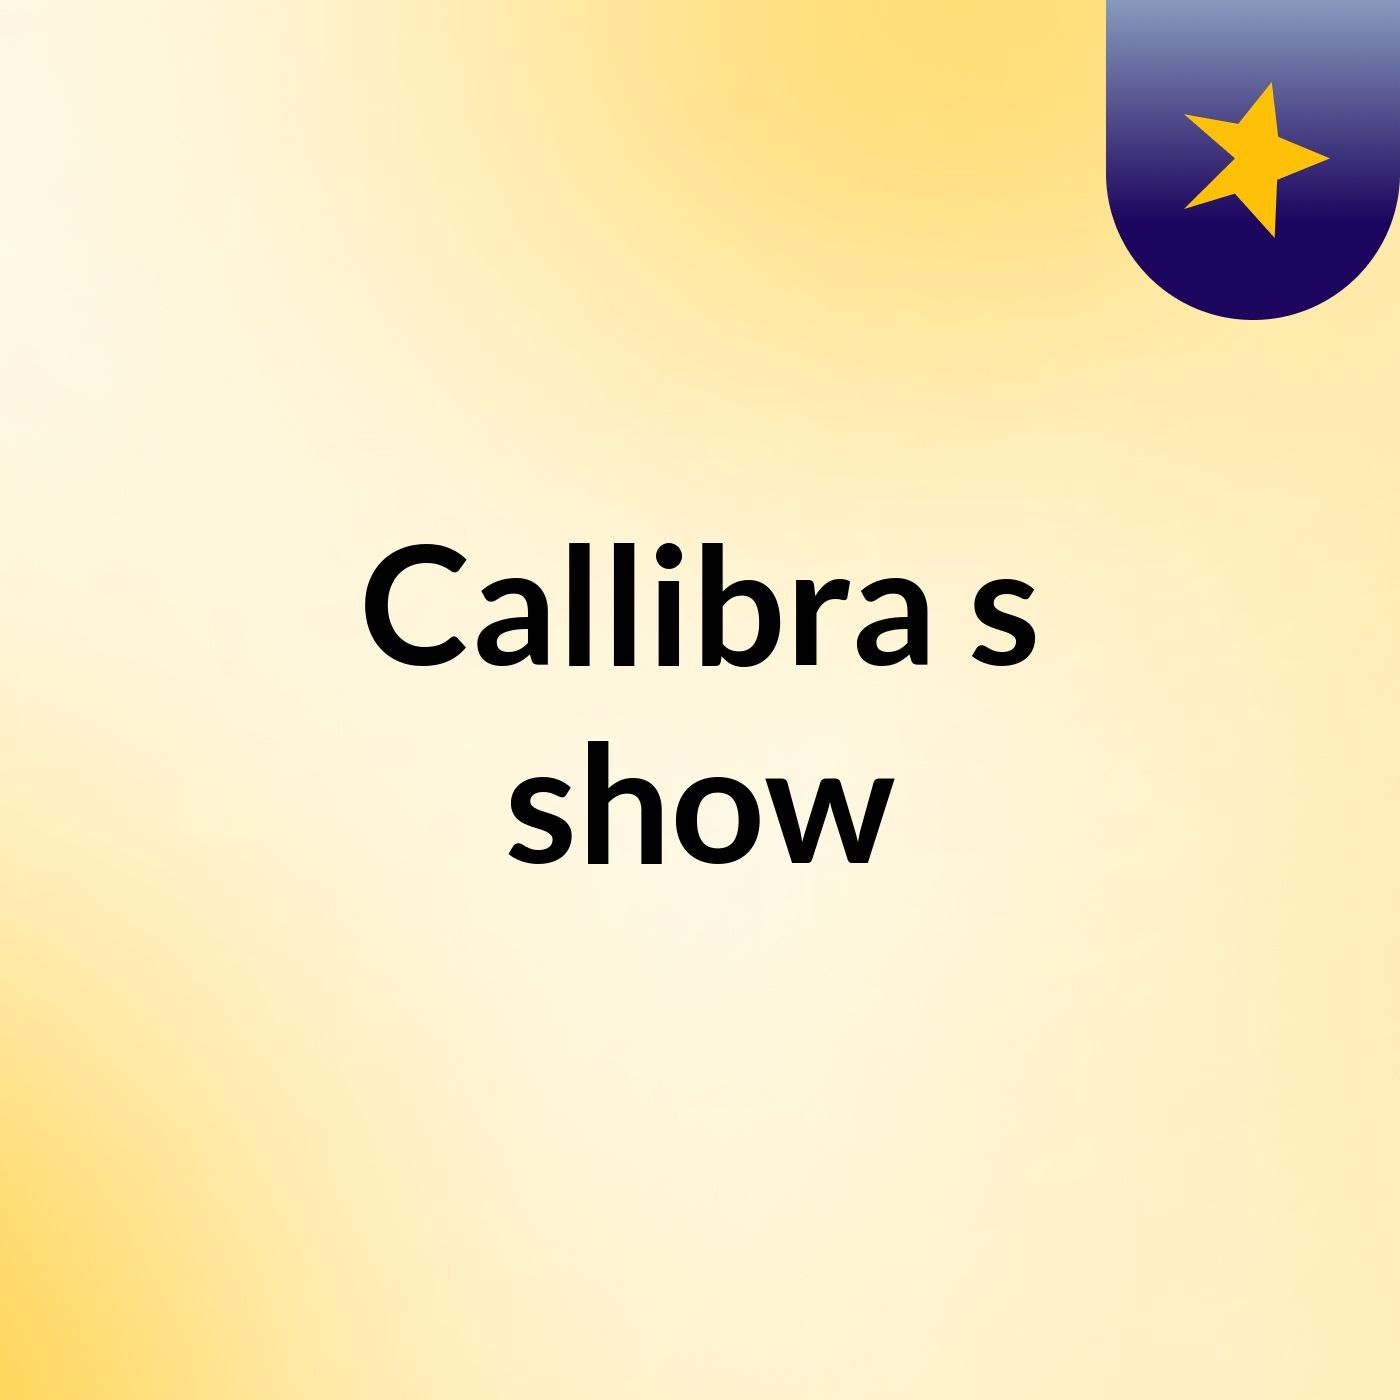 Callibra's show